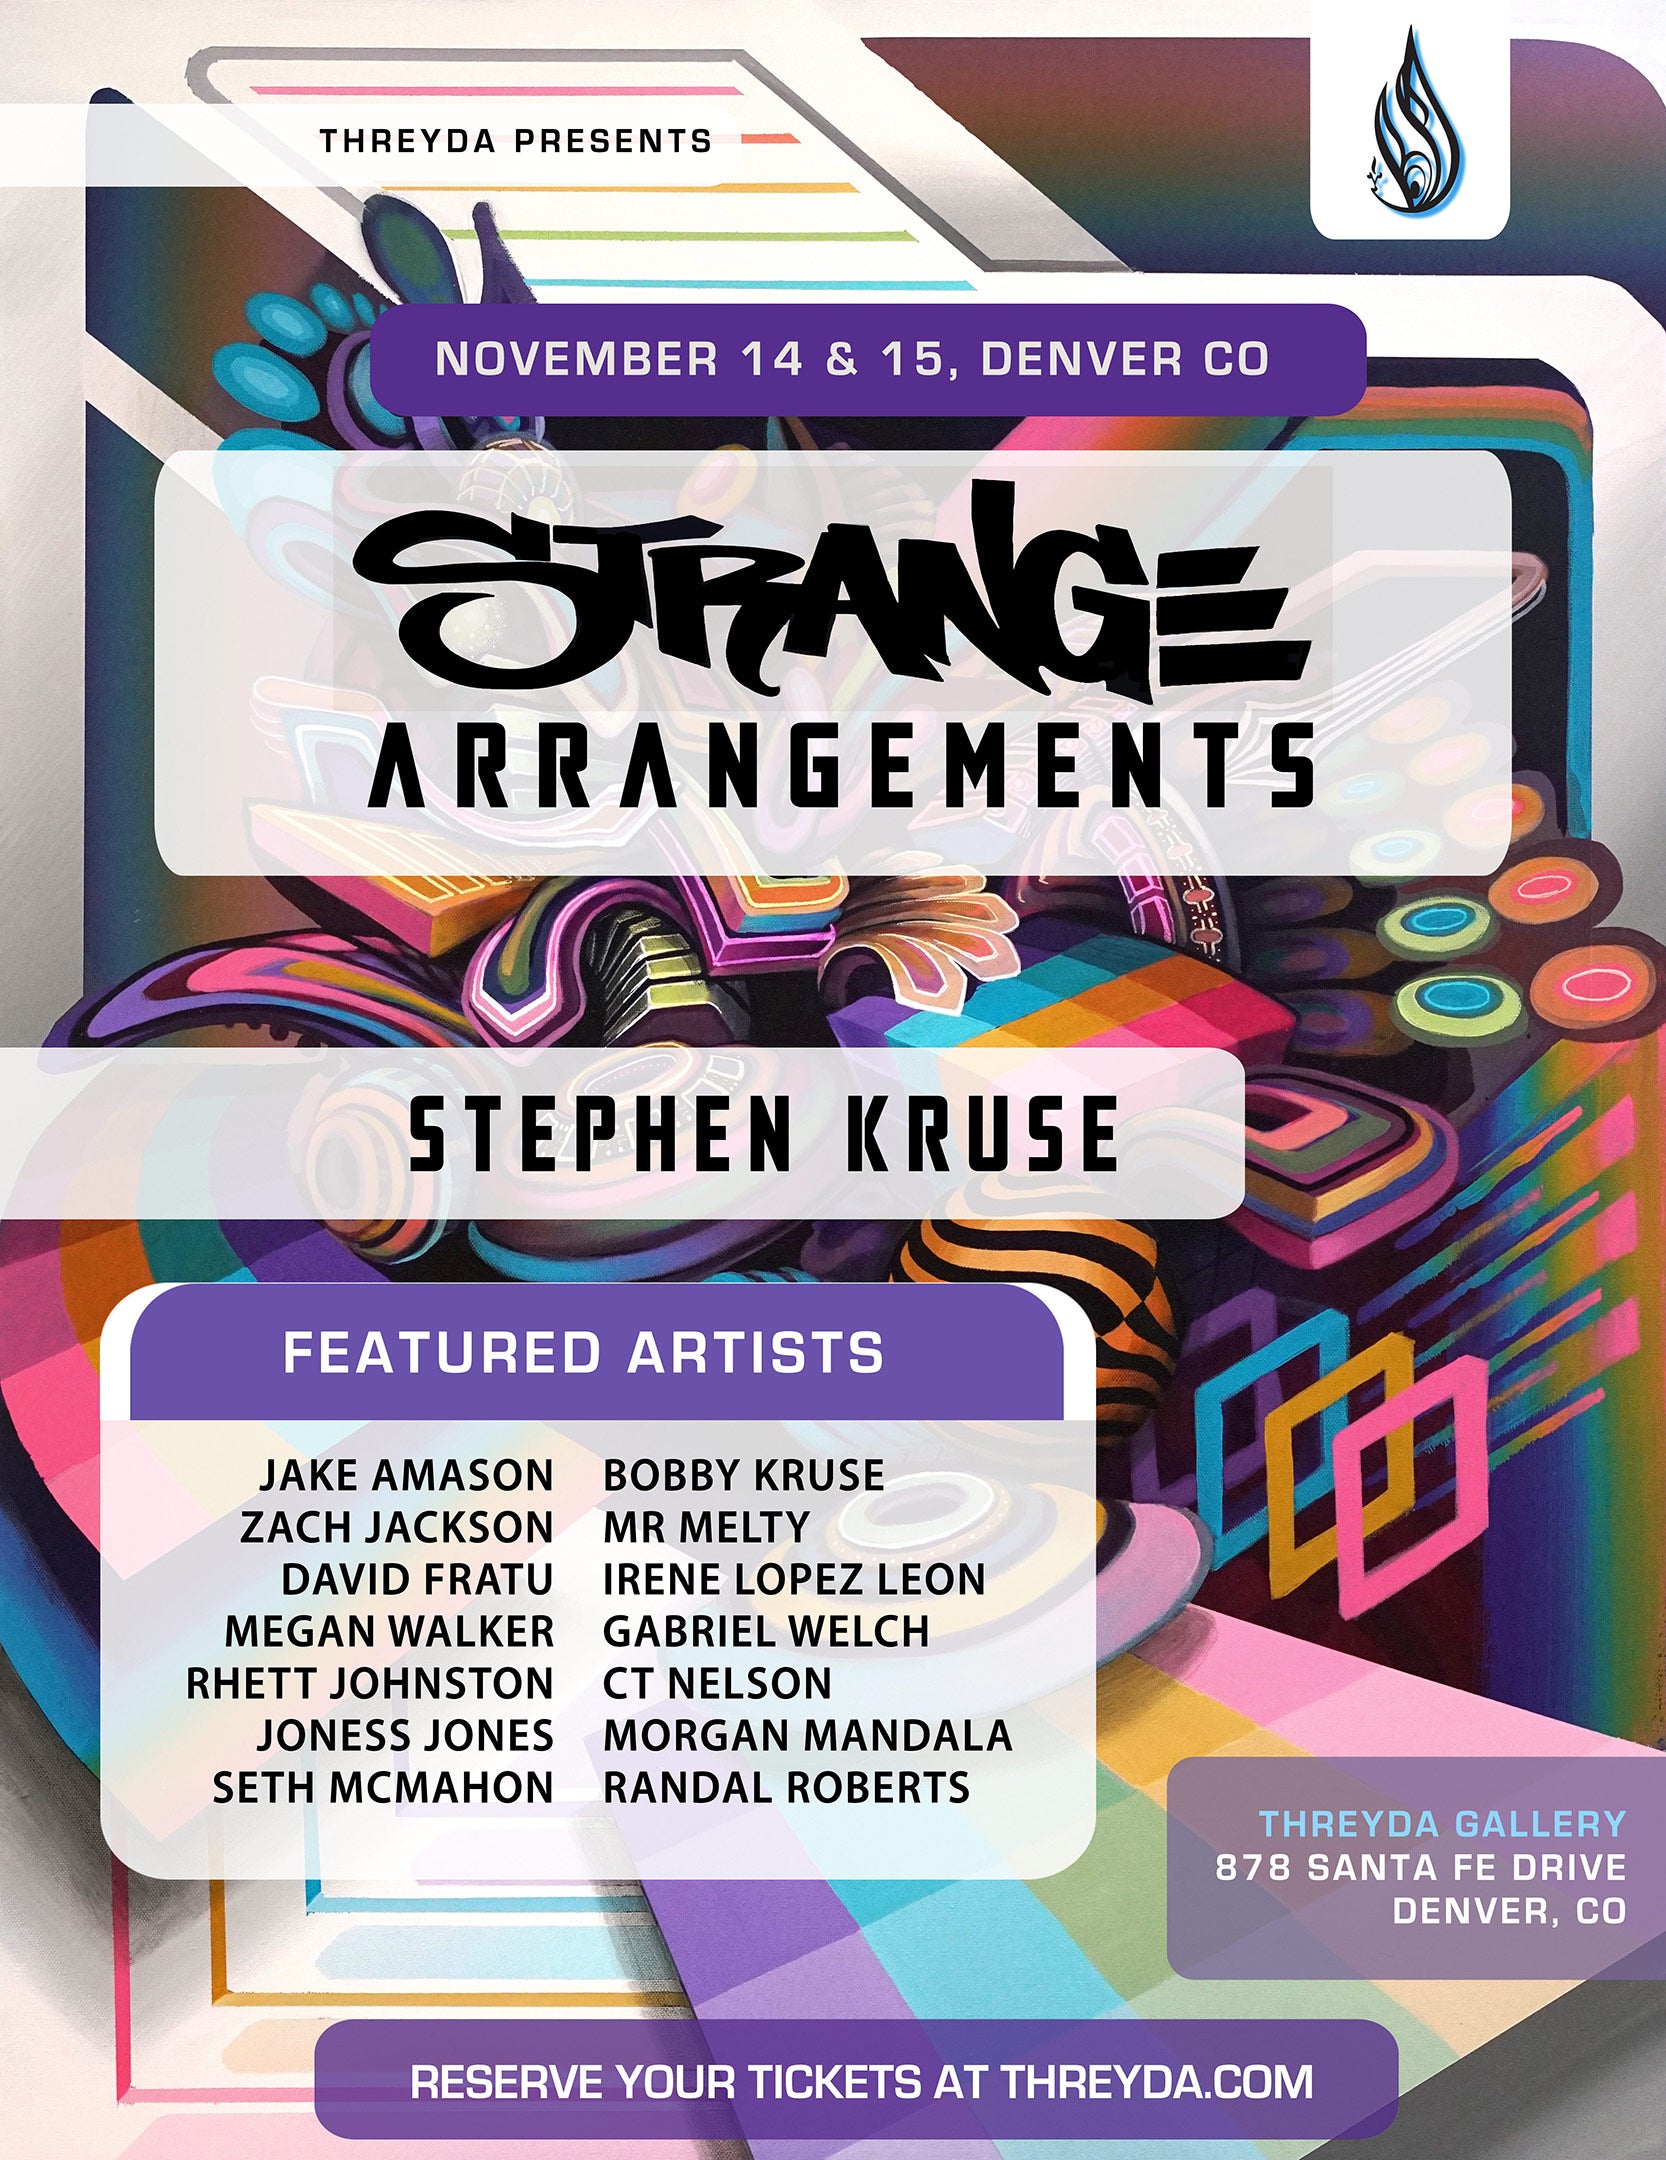 Strange Arrangements by Stephen Kruse - November 14th and 15th